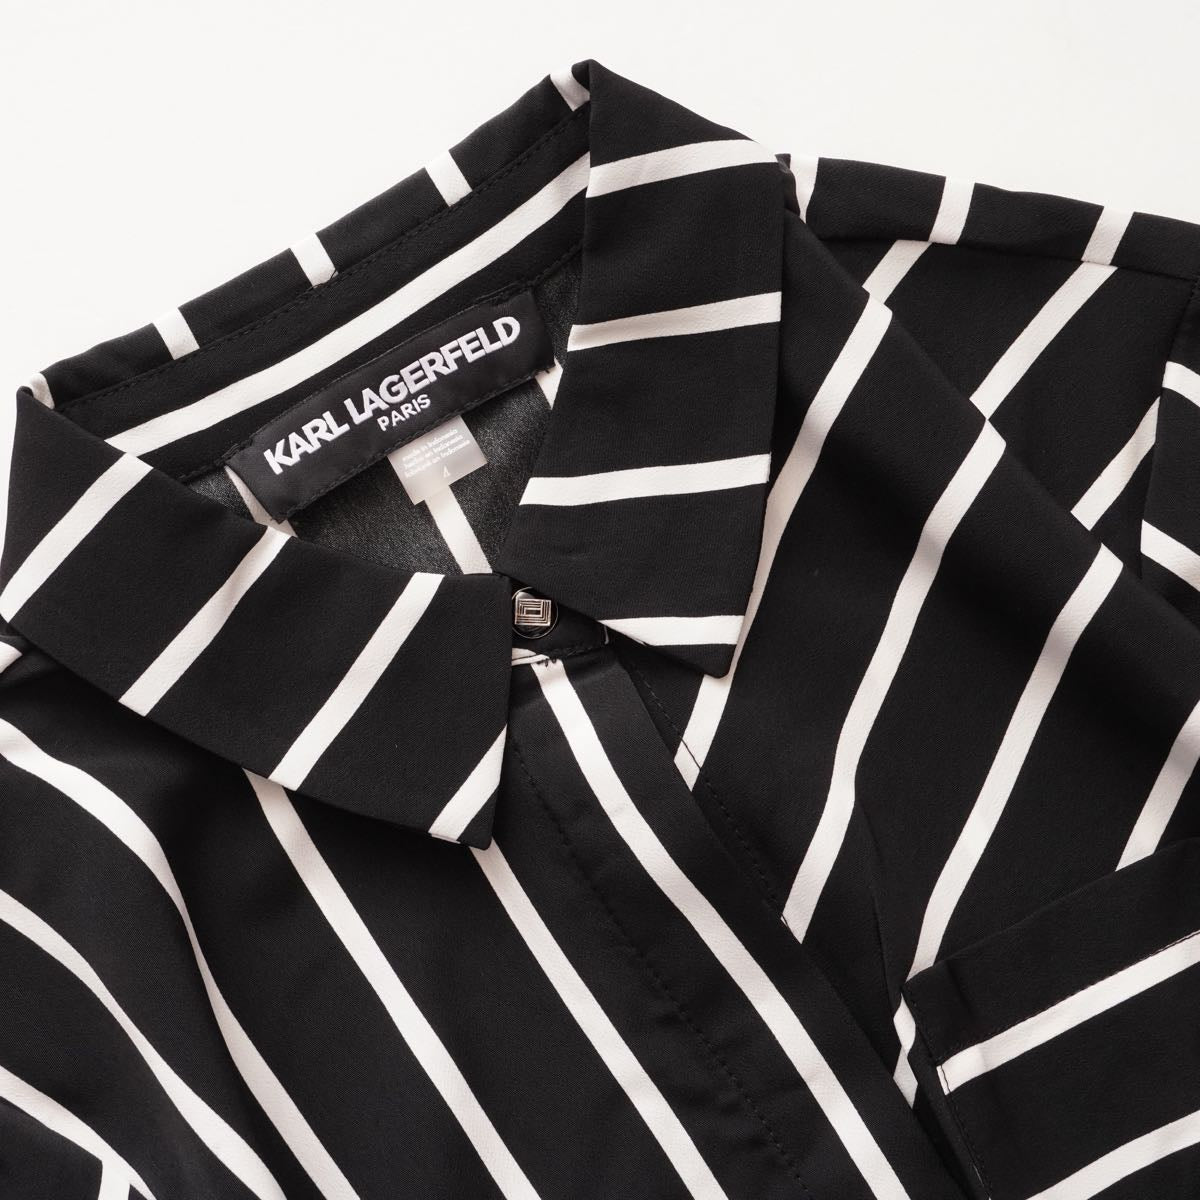 KARL LAGERFELD PARIS カールラガーフェルド ブラック ホワイト ストライプ柄 シャツワンピース ドレス BLACK WHITE STRIPED SHIRT DRESS WOMEN